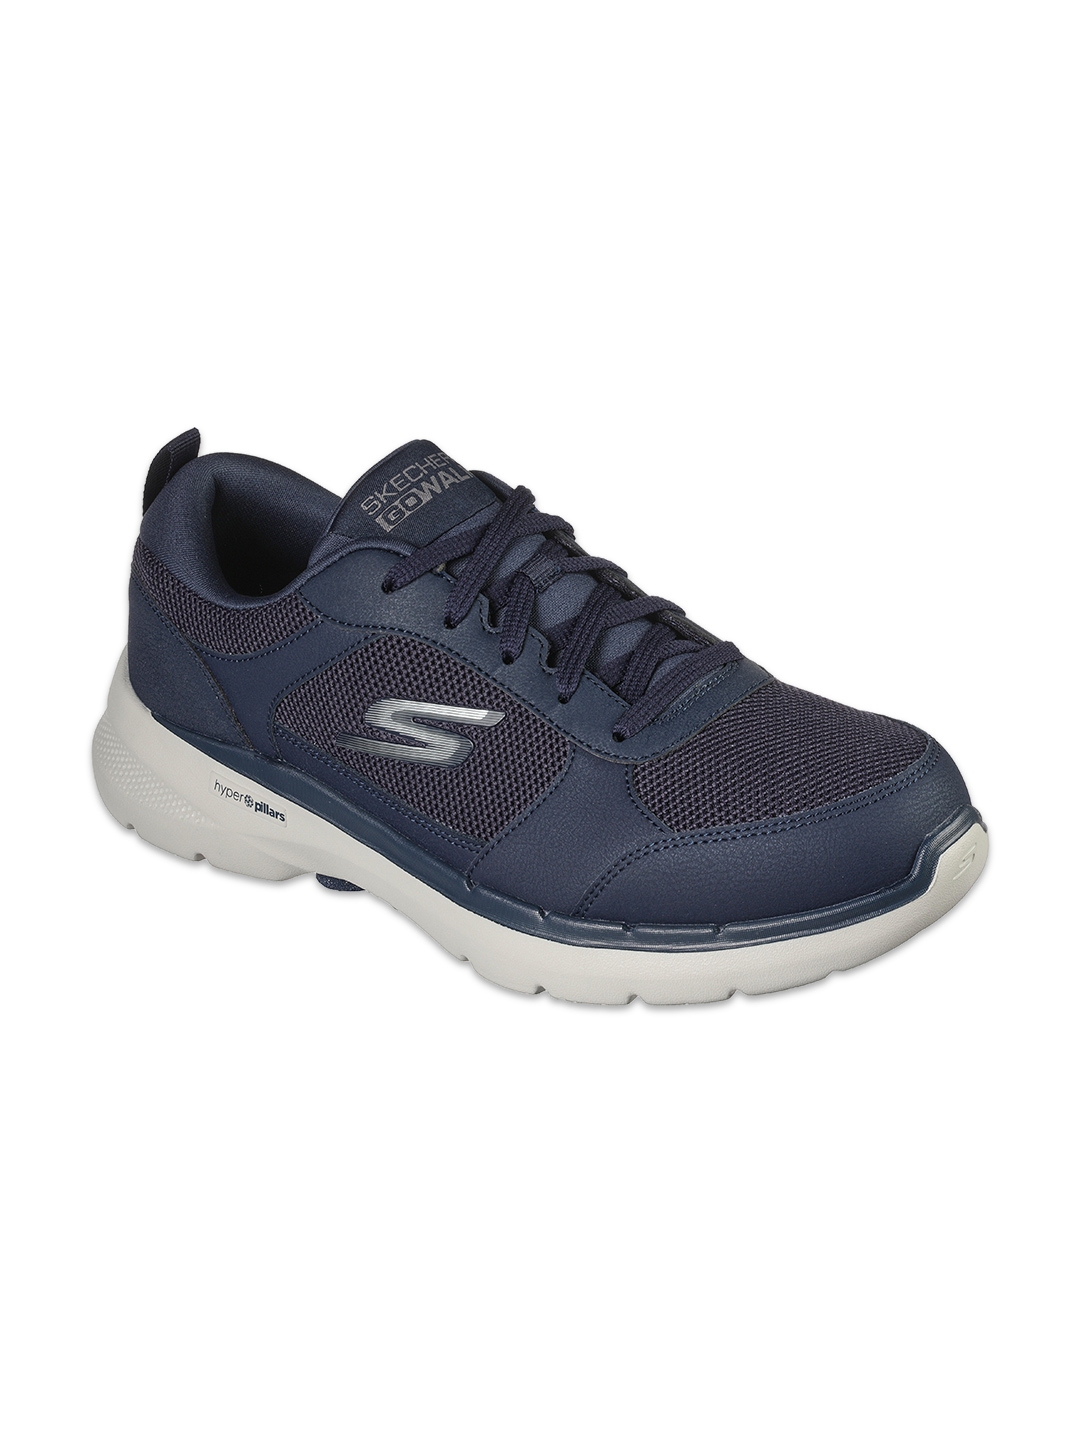 Buy Skechers Men Navy Blue Mesh Non Marking Walking Shoes - Sports ...